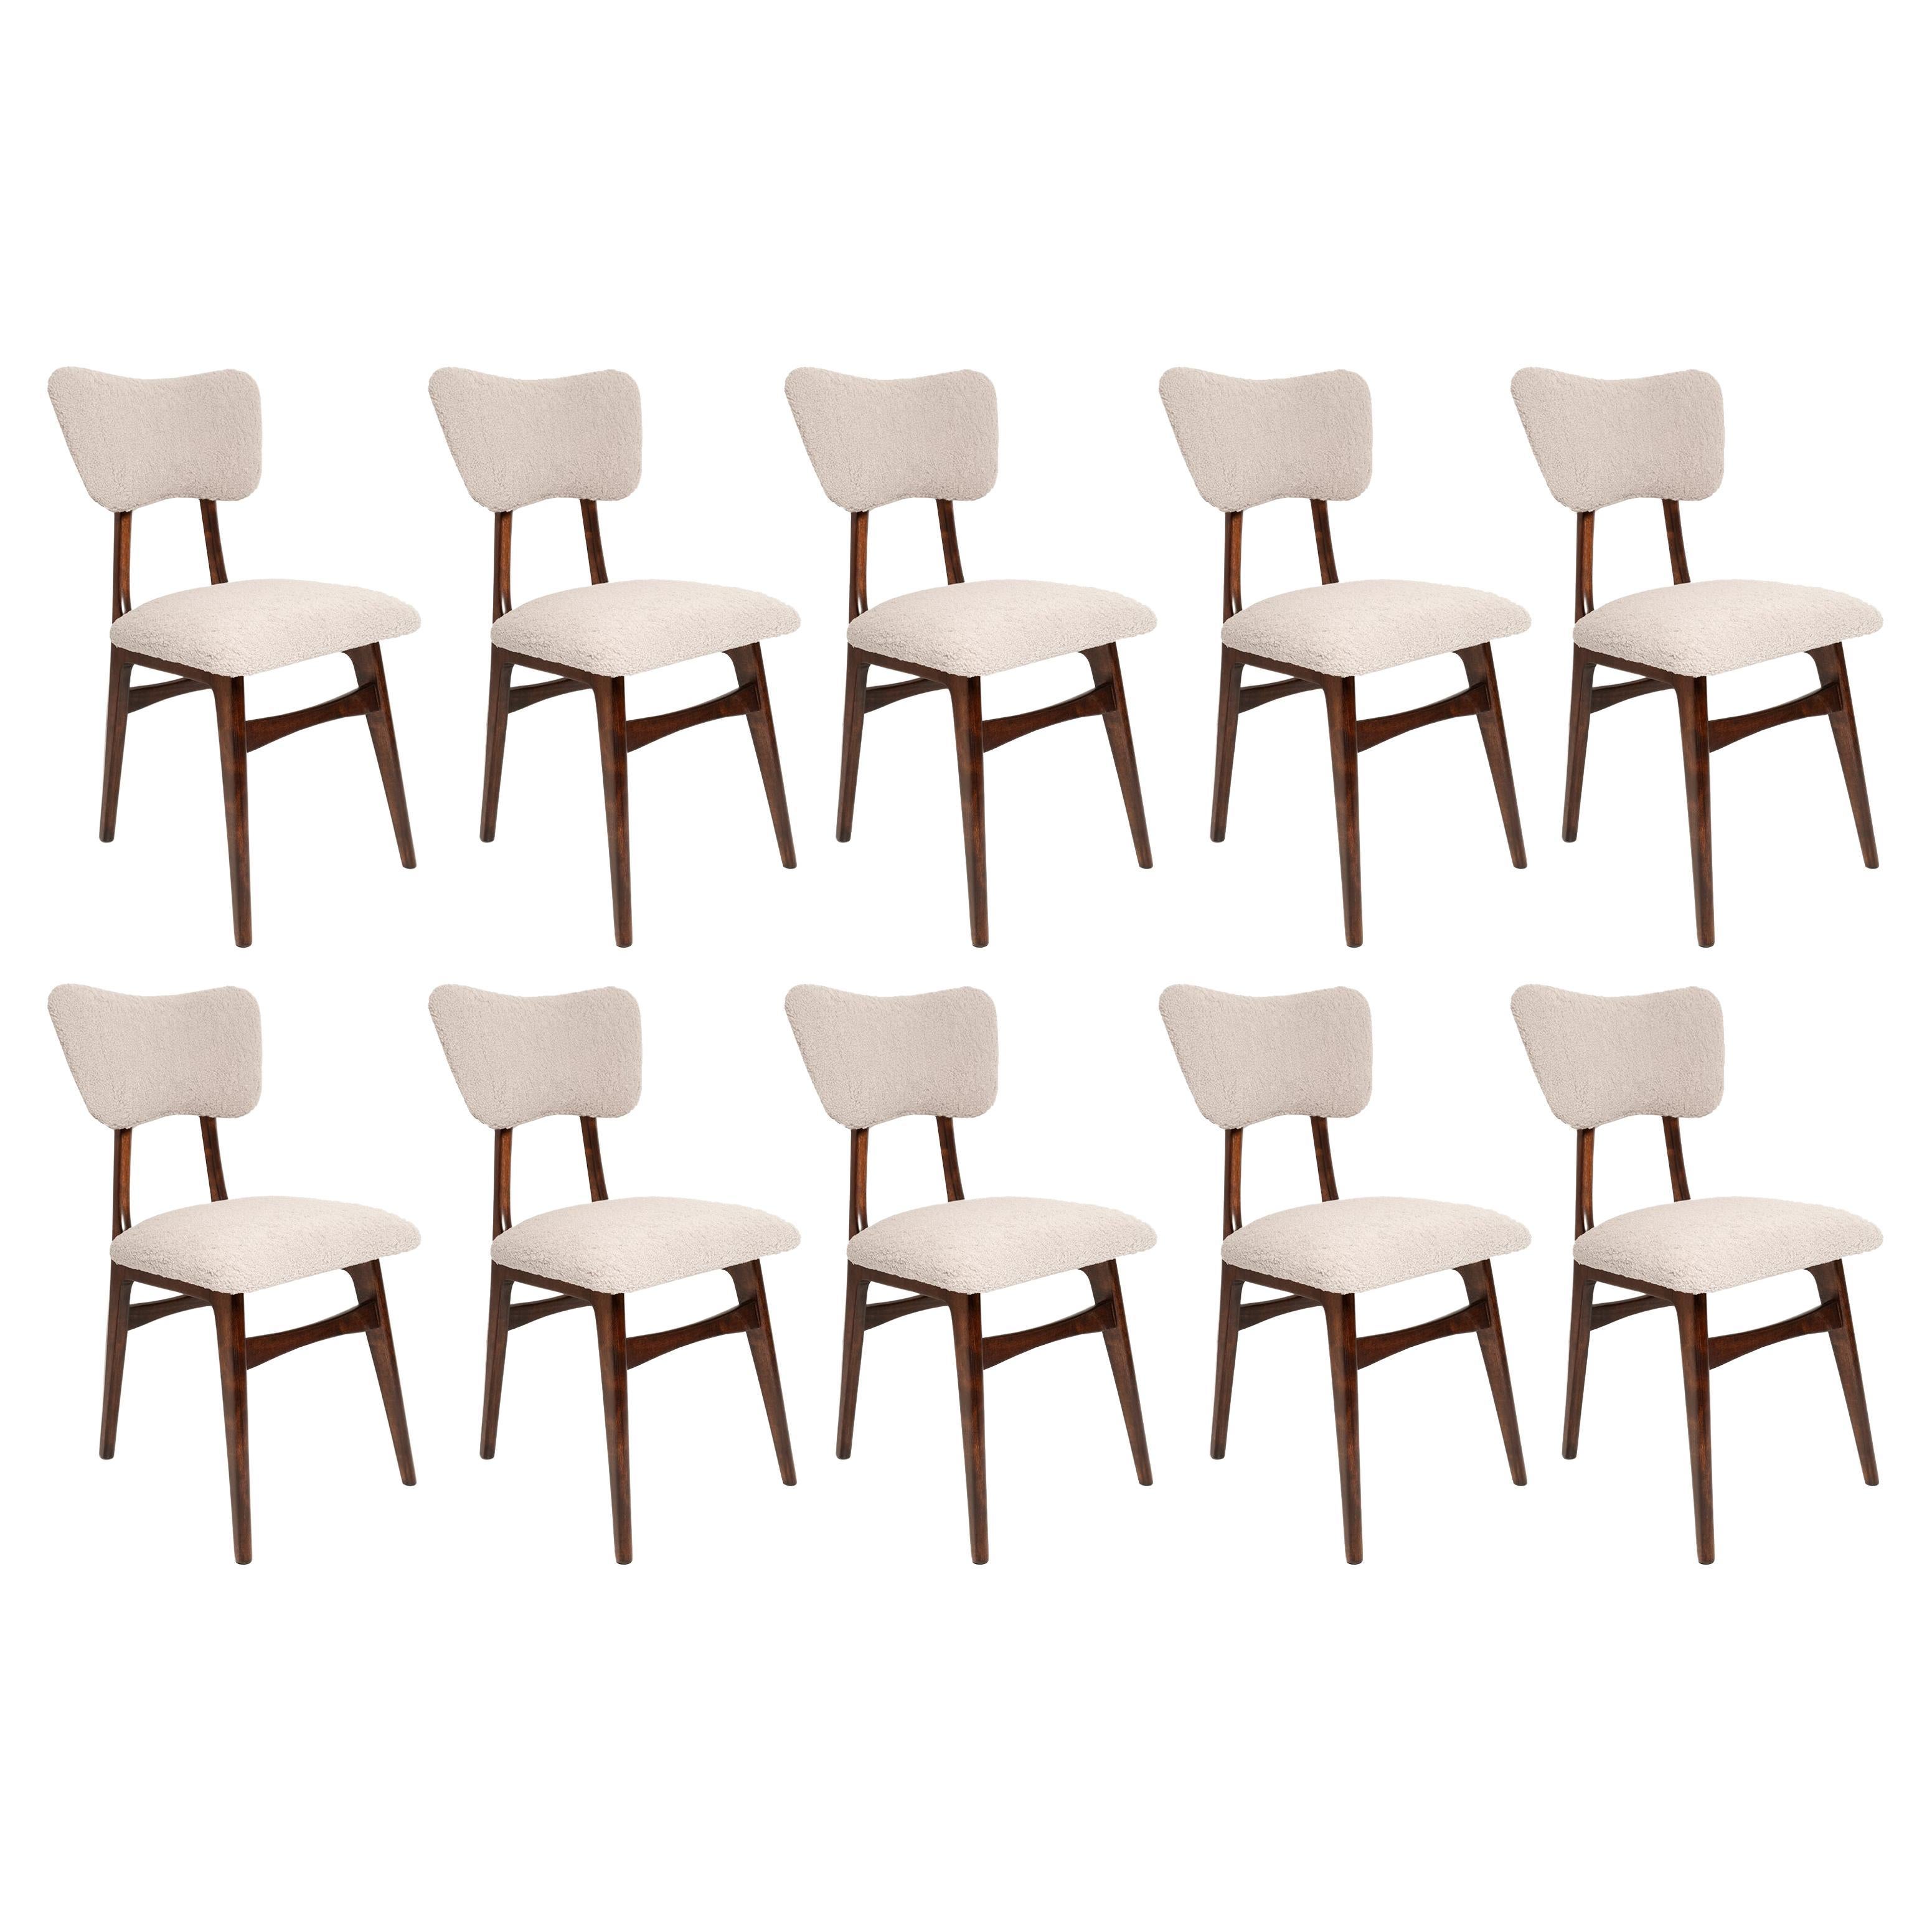 Set of Ten Mid Century Chairs, Light Gray Boucle, Dark Walnut Wood, Europe, 1960s For Sale